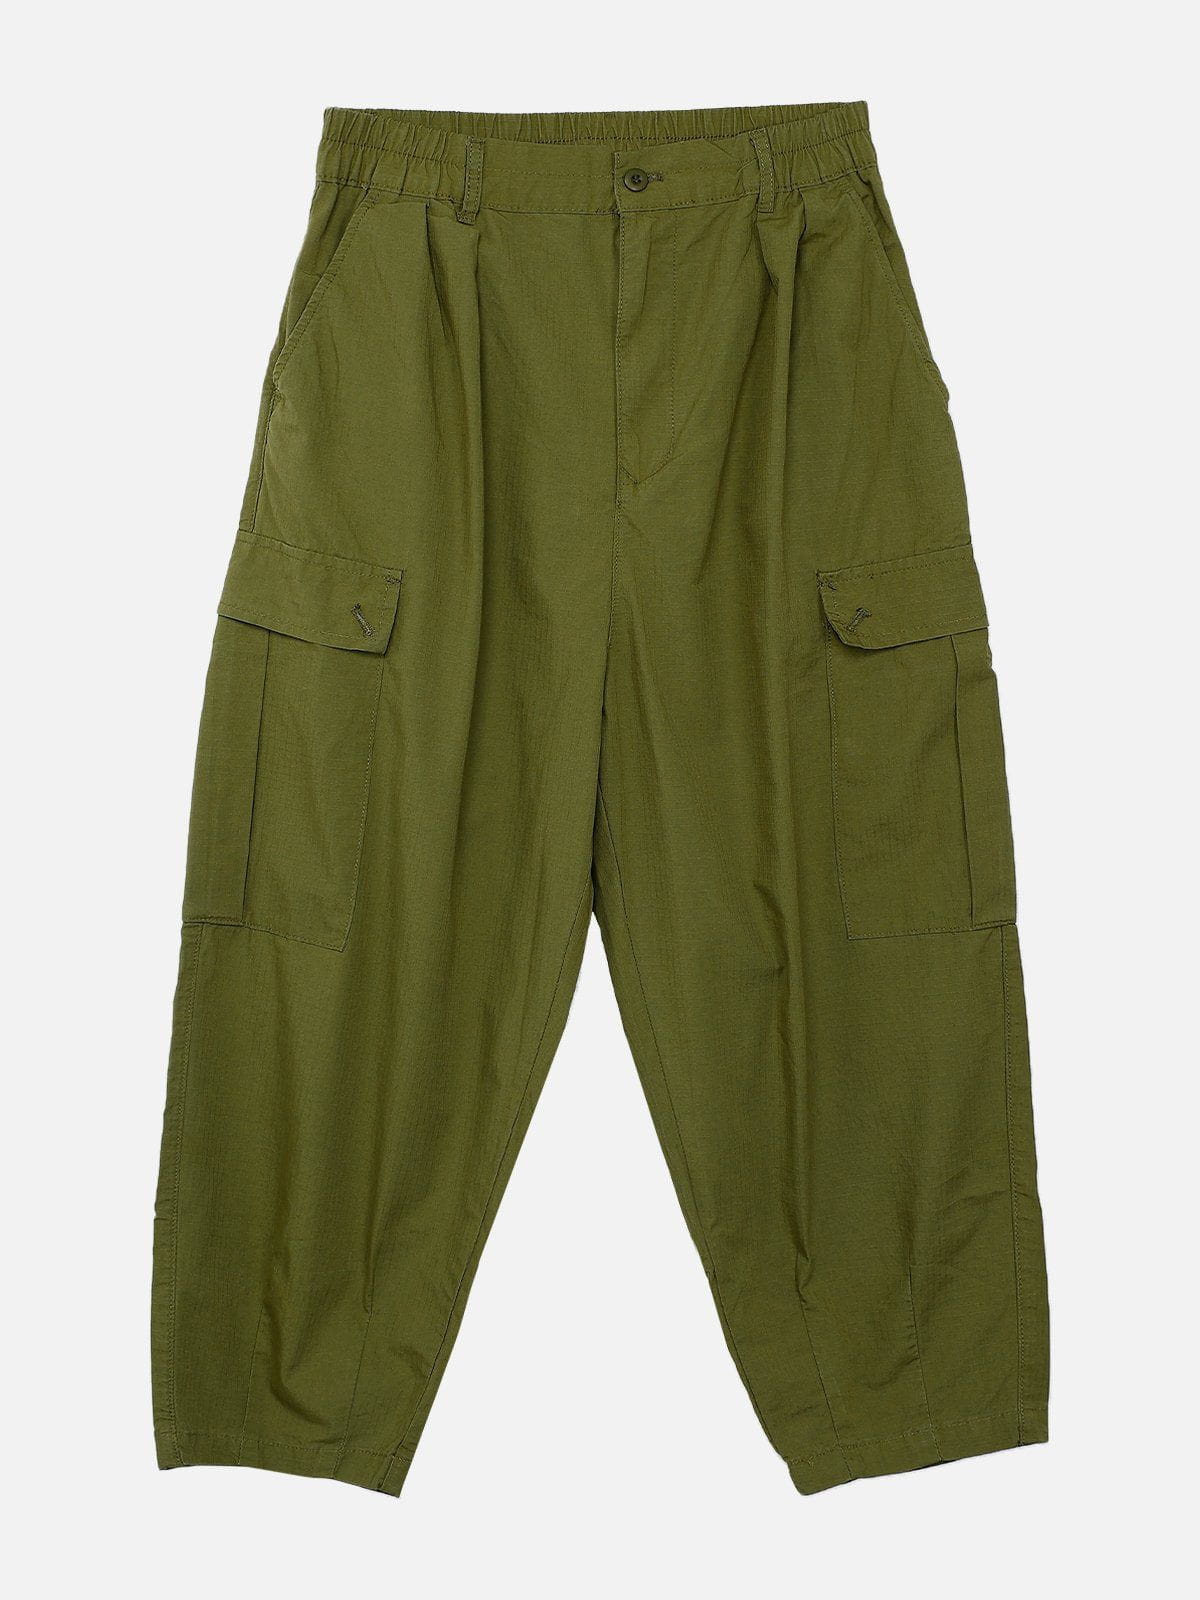 Majesda® - Solid Large Pocket Pants outfit ideas streetwear fashion